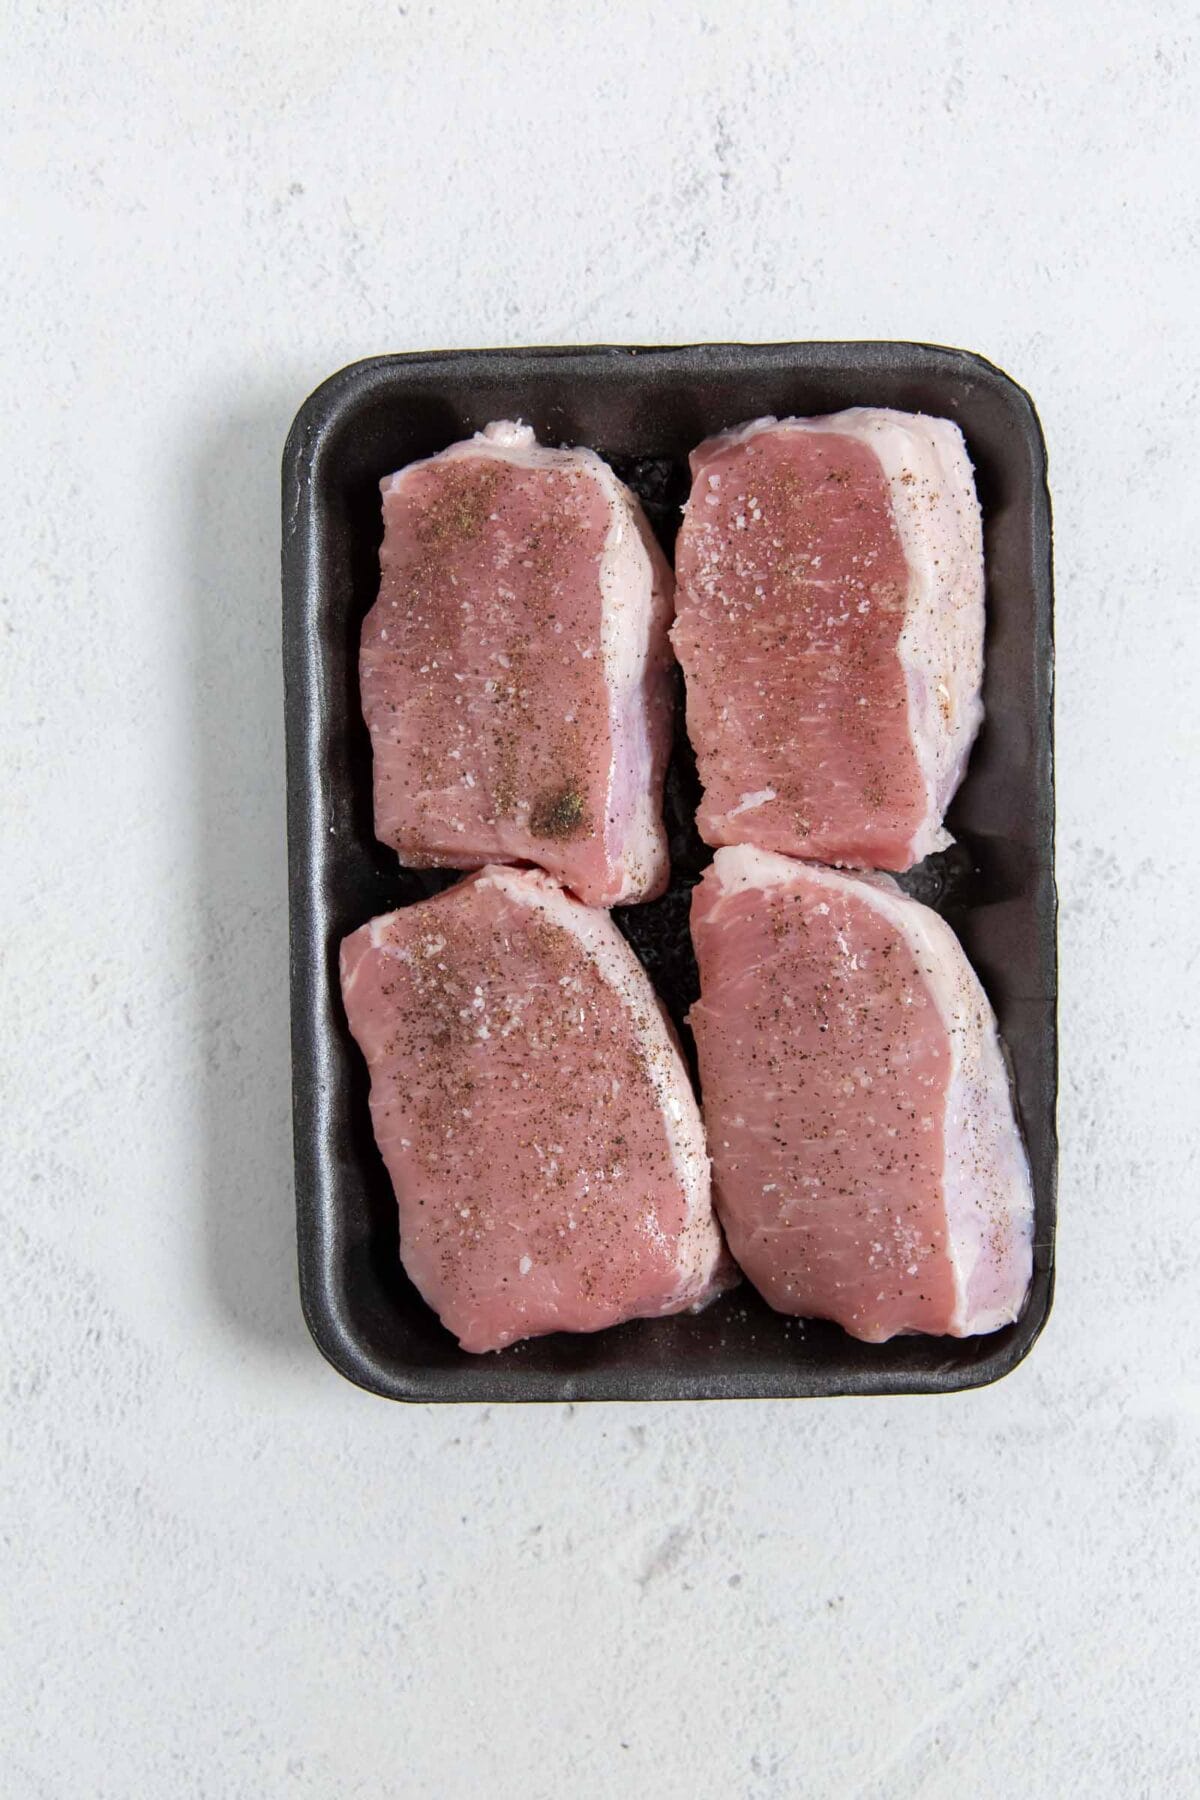 Raw pork chops seasoned with salt and pepper.